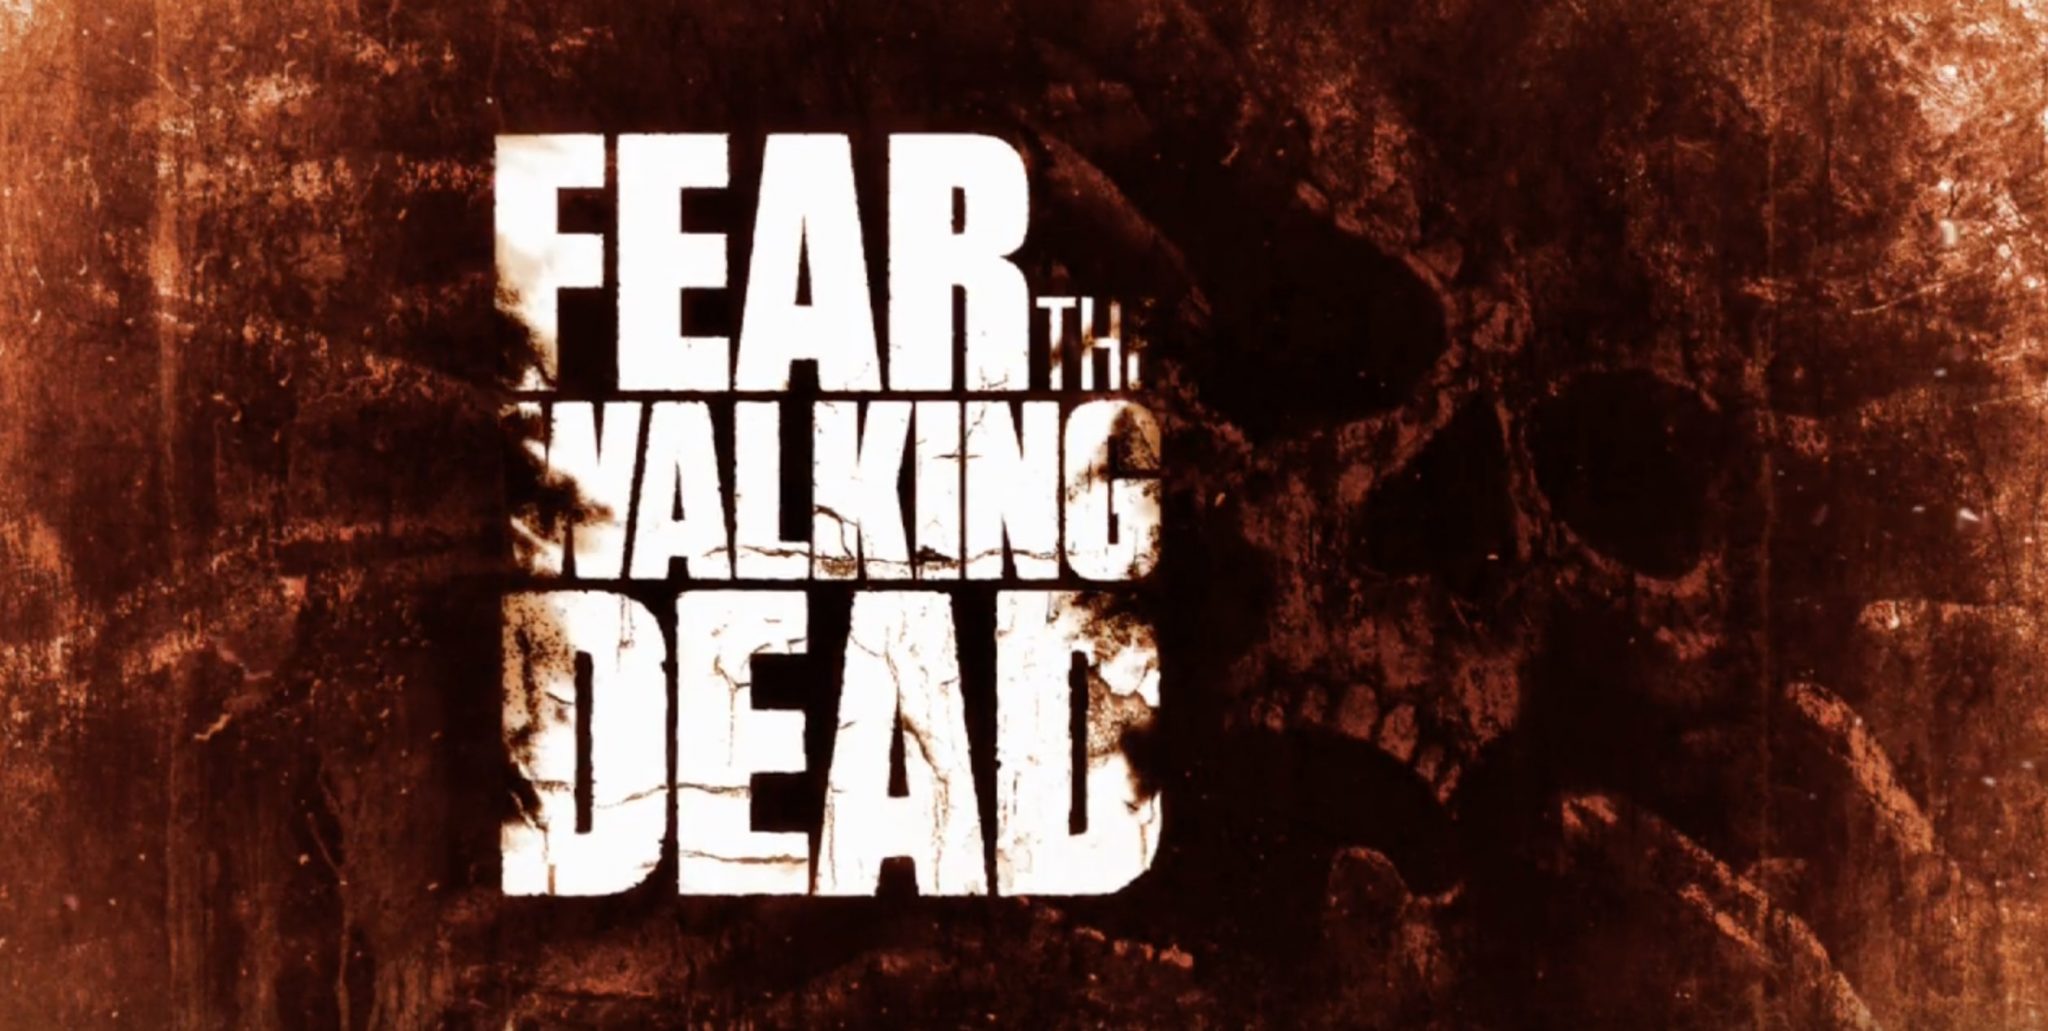 Fear The Walking Dead Amazon Prime Tv Show Uk Air Date Uk Tv Premiere Date Us Tv Premiere Date Us Tv Air Date